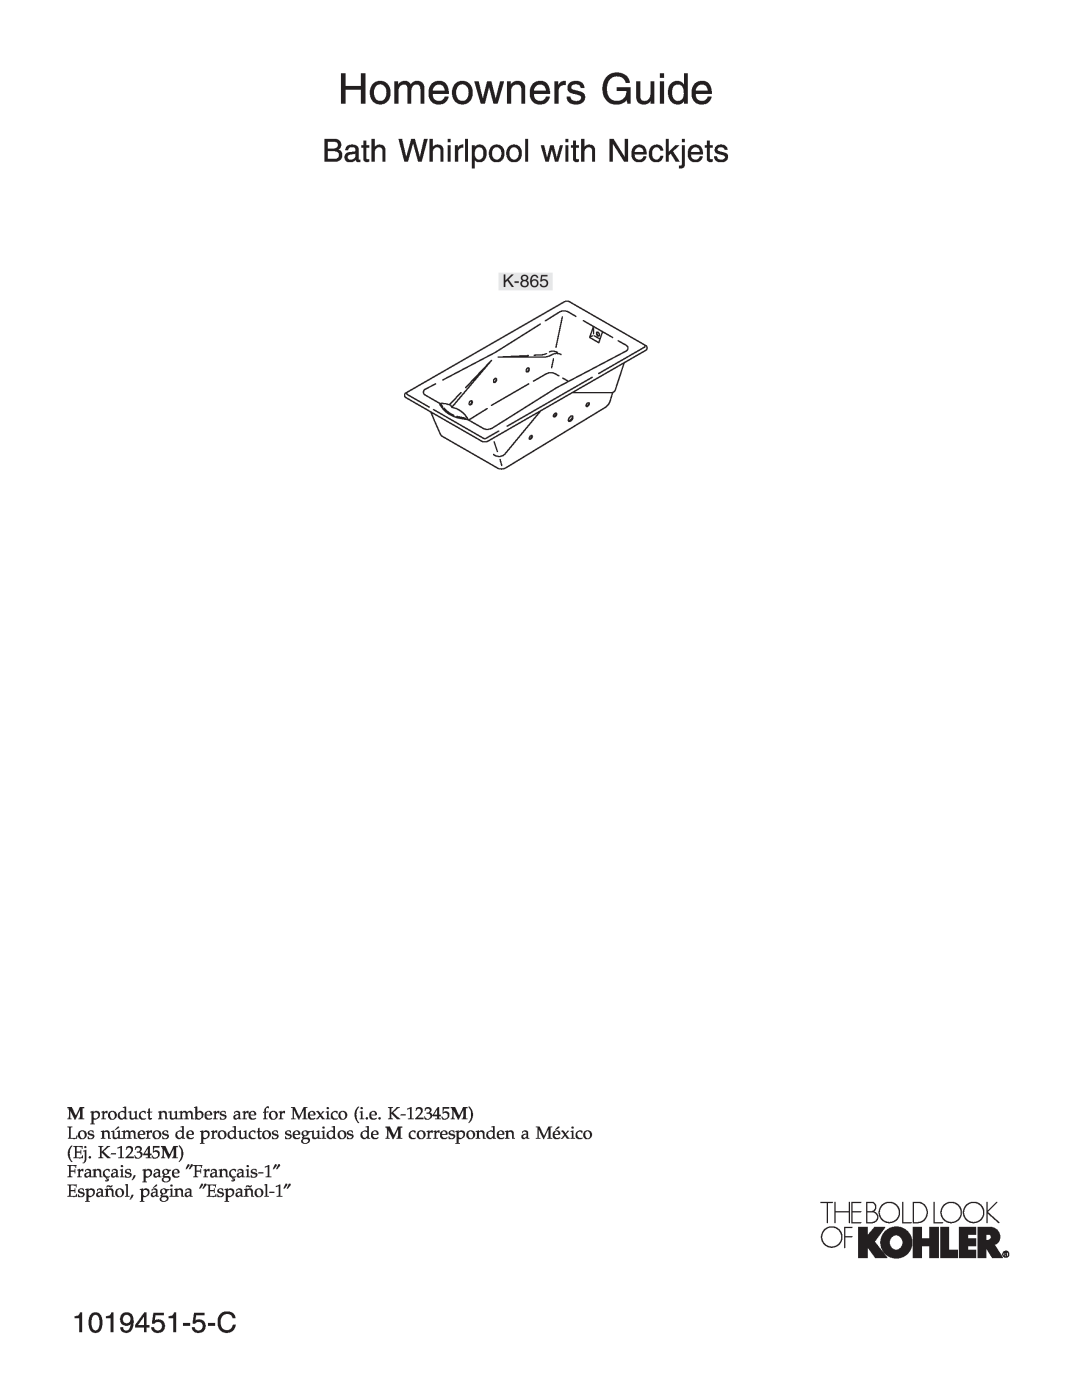 Kohler K-865 manual Homeowners Guide, Bath Whirlpool with Neckjets, 1019451-5-C 